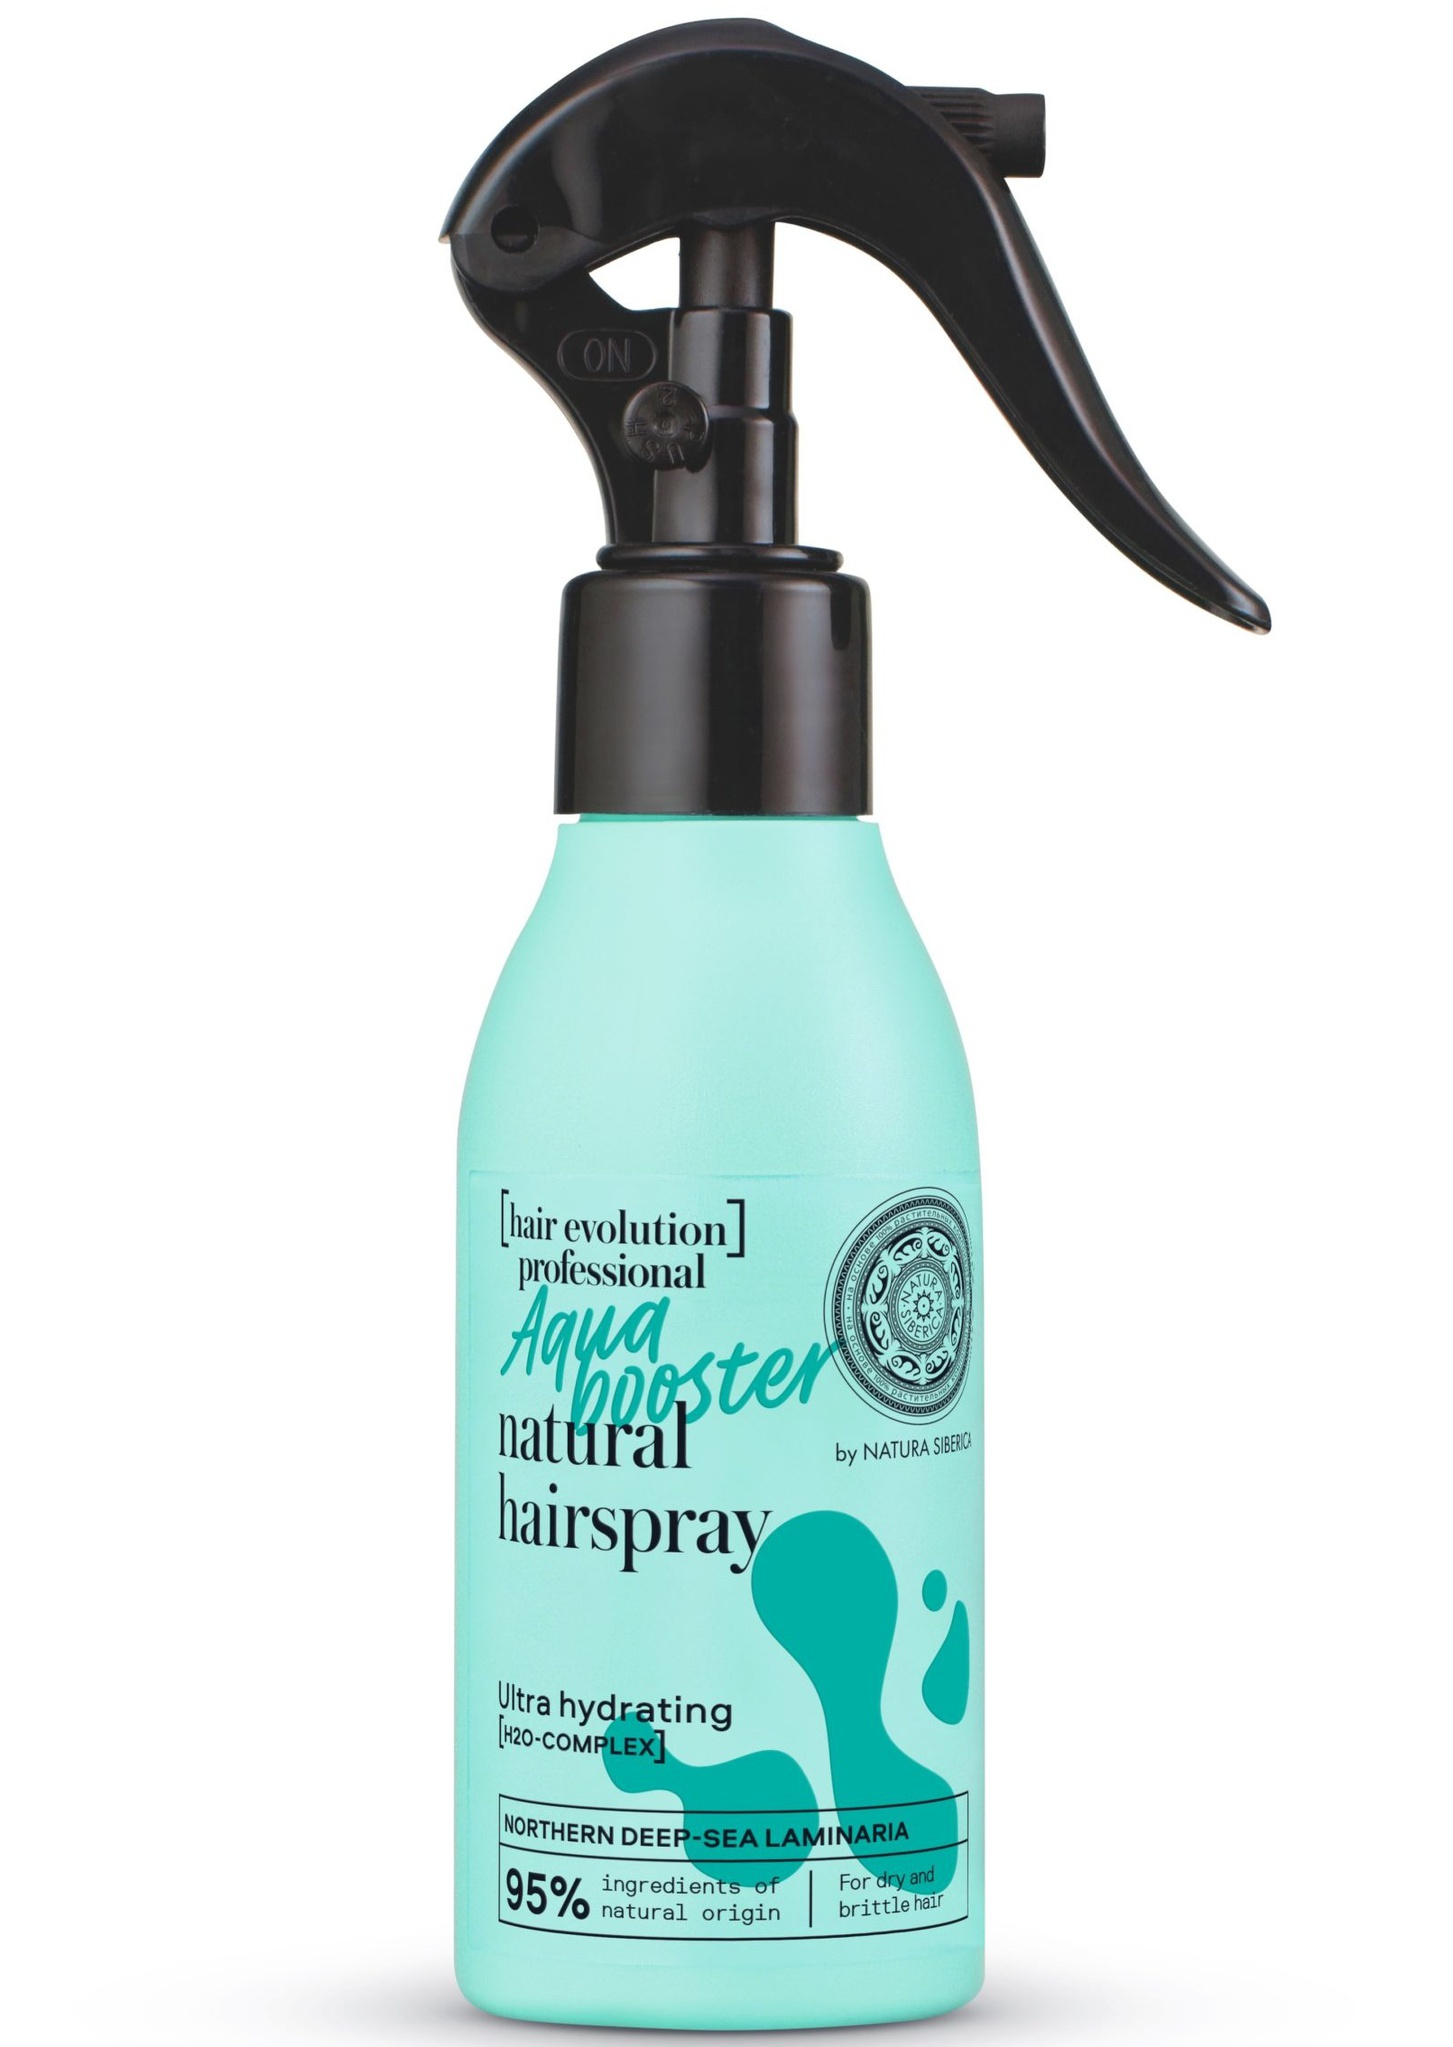 Natura Siberica Hair Evolution Aqua Booster Natural Hairspray